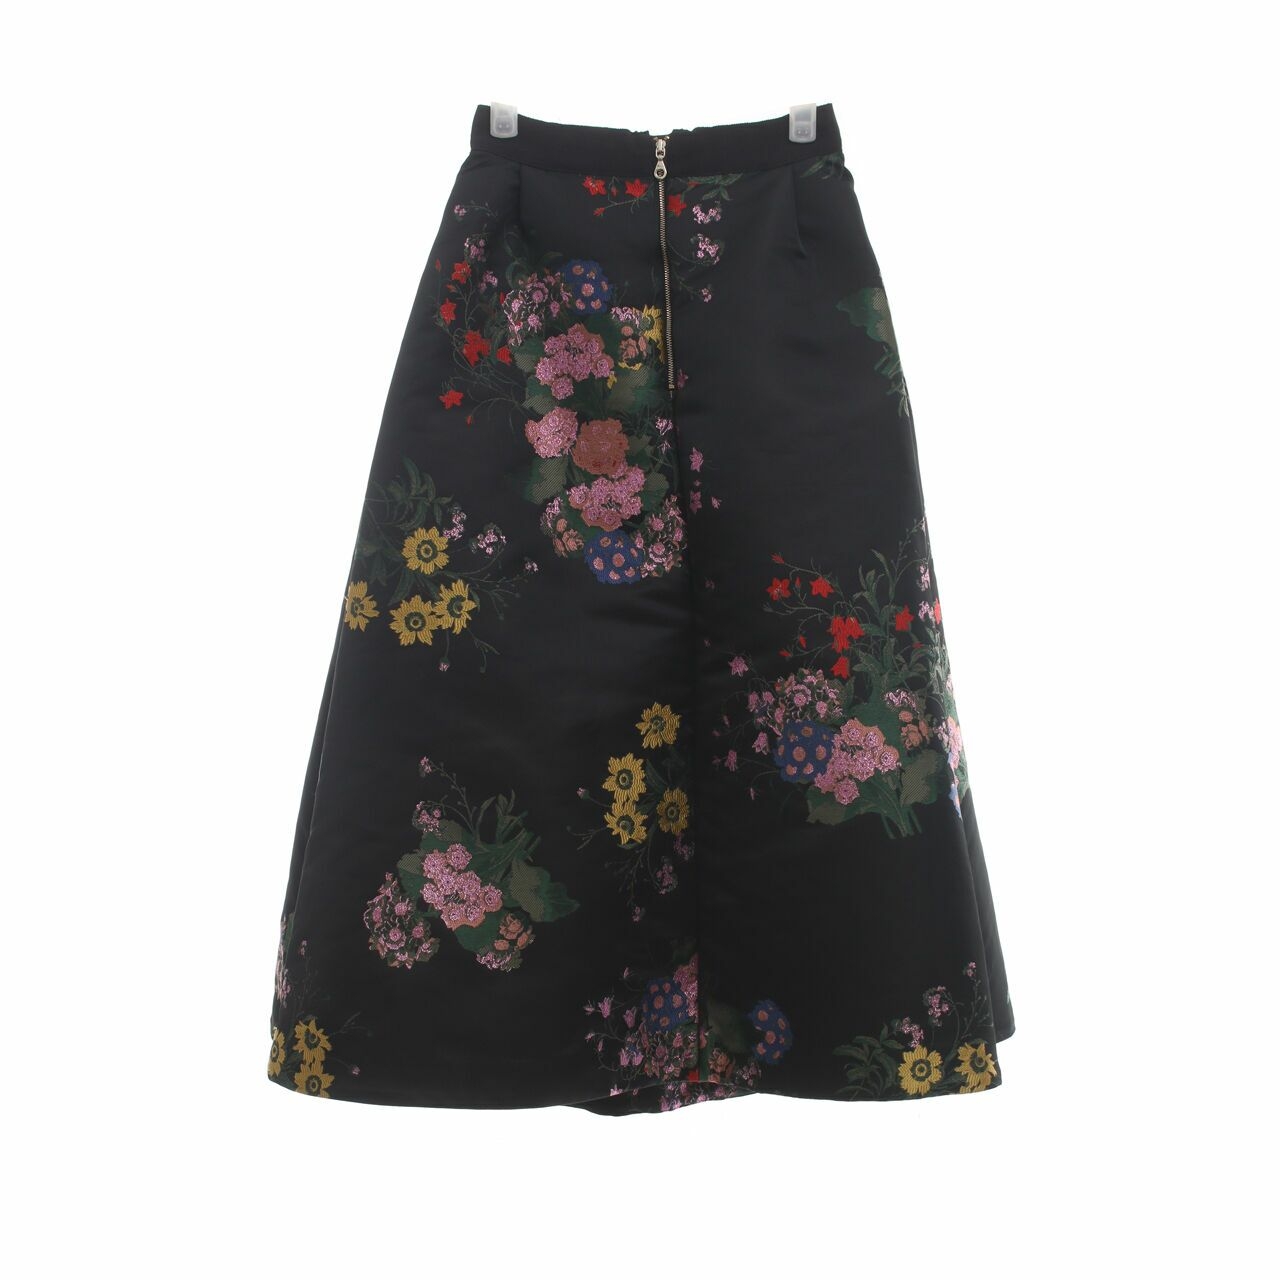 Erdem x H&M Black Embroidery Maxi Skirt